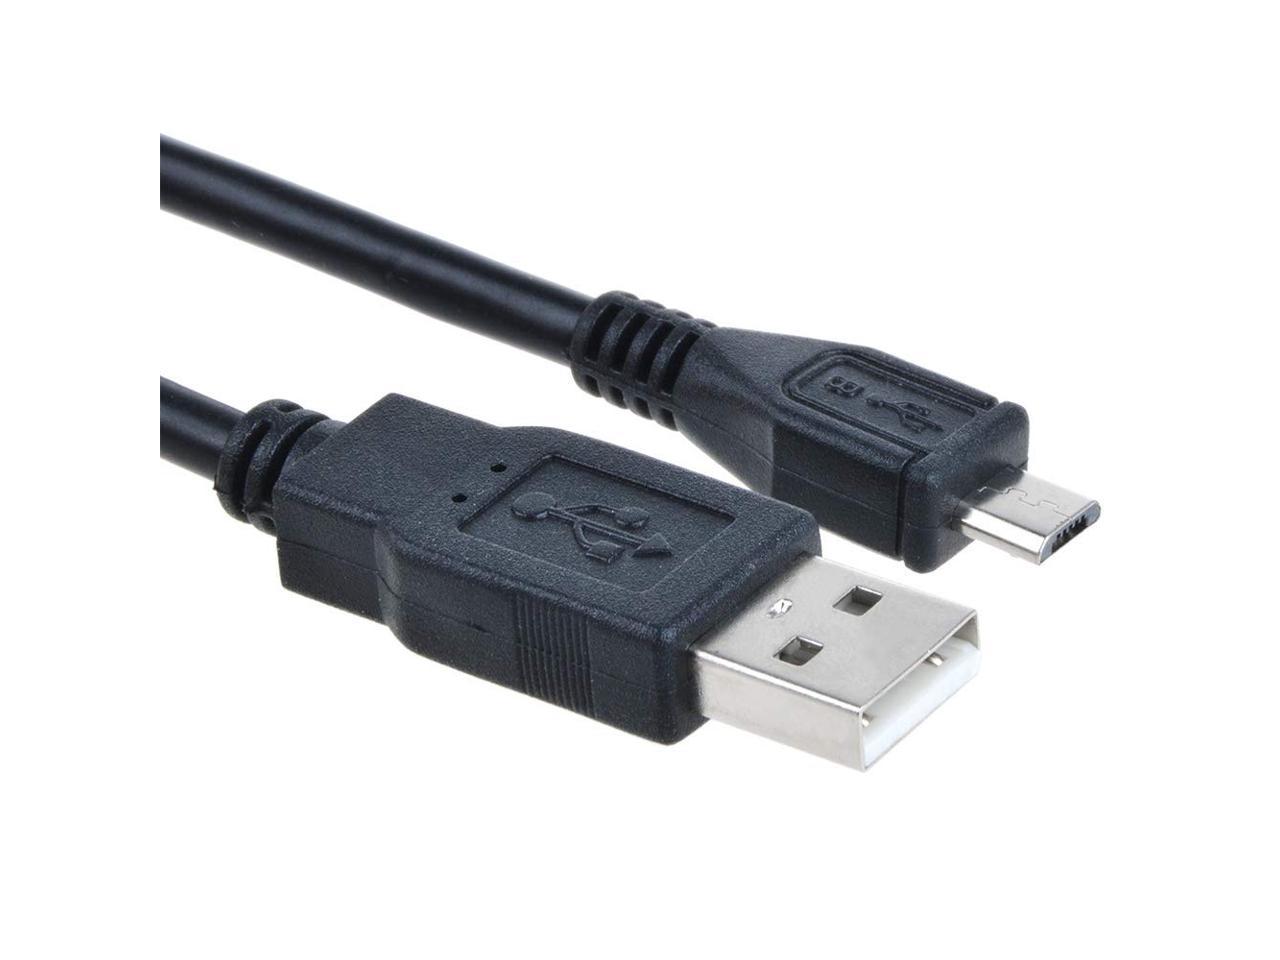 yan USB Charger PC Data Sync Lead Cable Cord for Verizon QMV7a QMV7b Tablet 